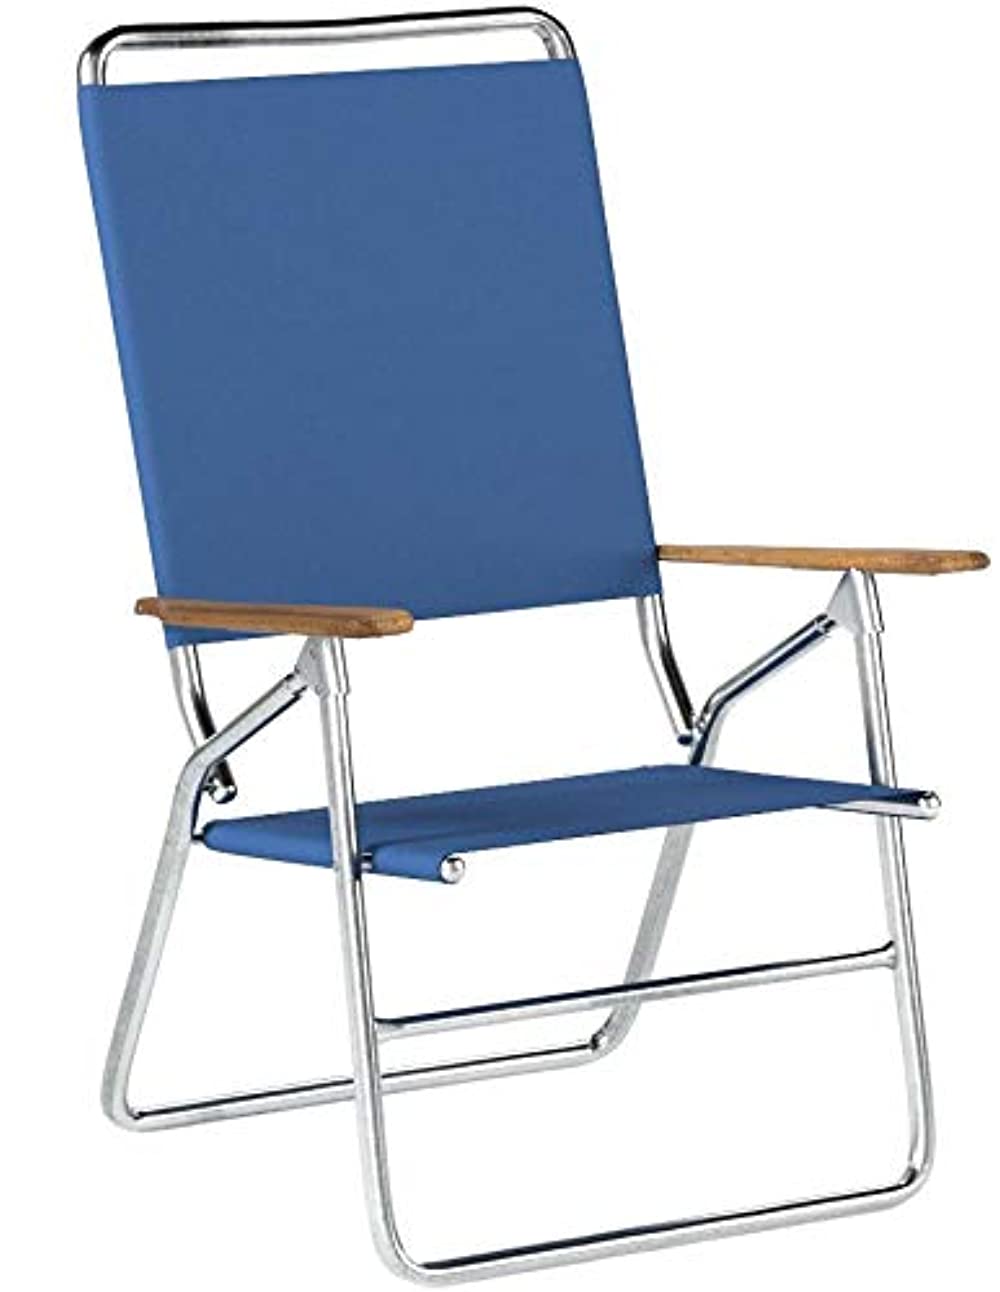 Telescope Casual Light and Easy High Boy Folding Beach Arm Chair Cobalt 71135D01 - image 5 of 7